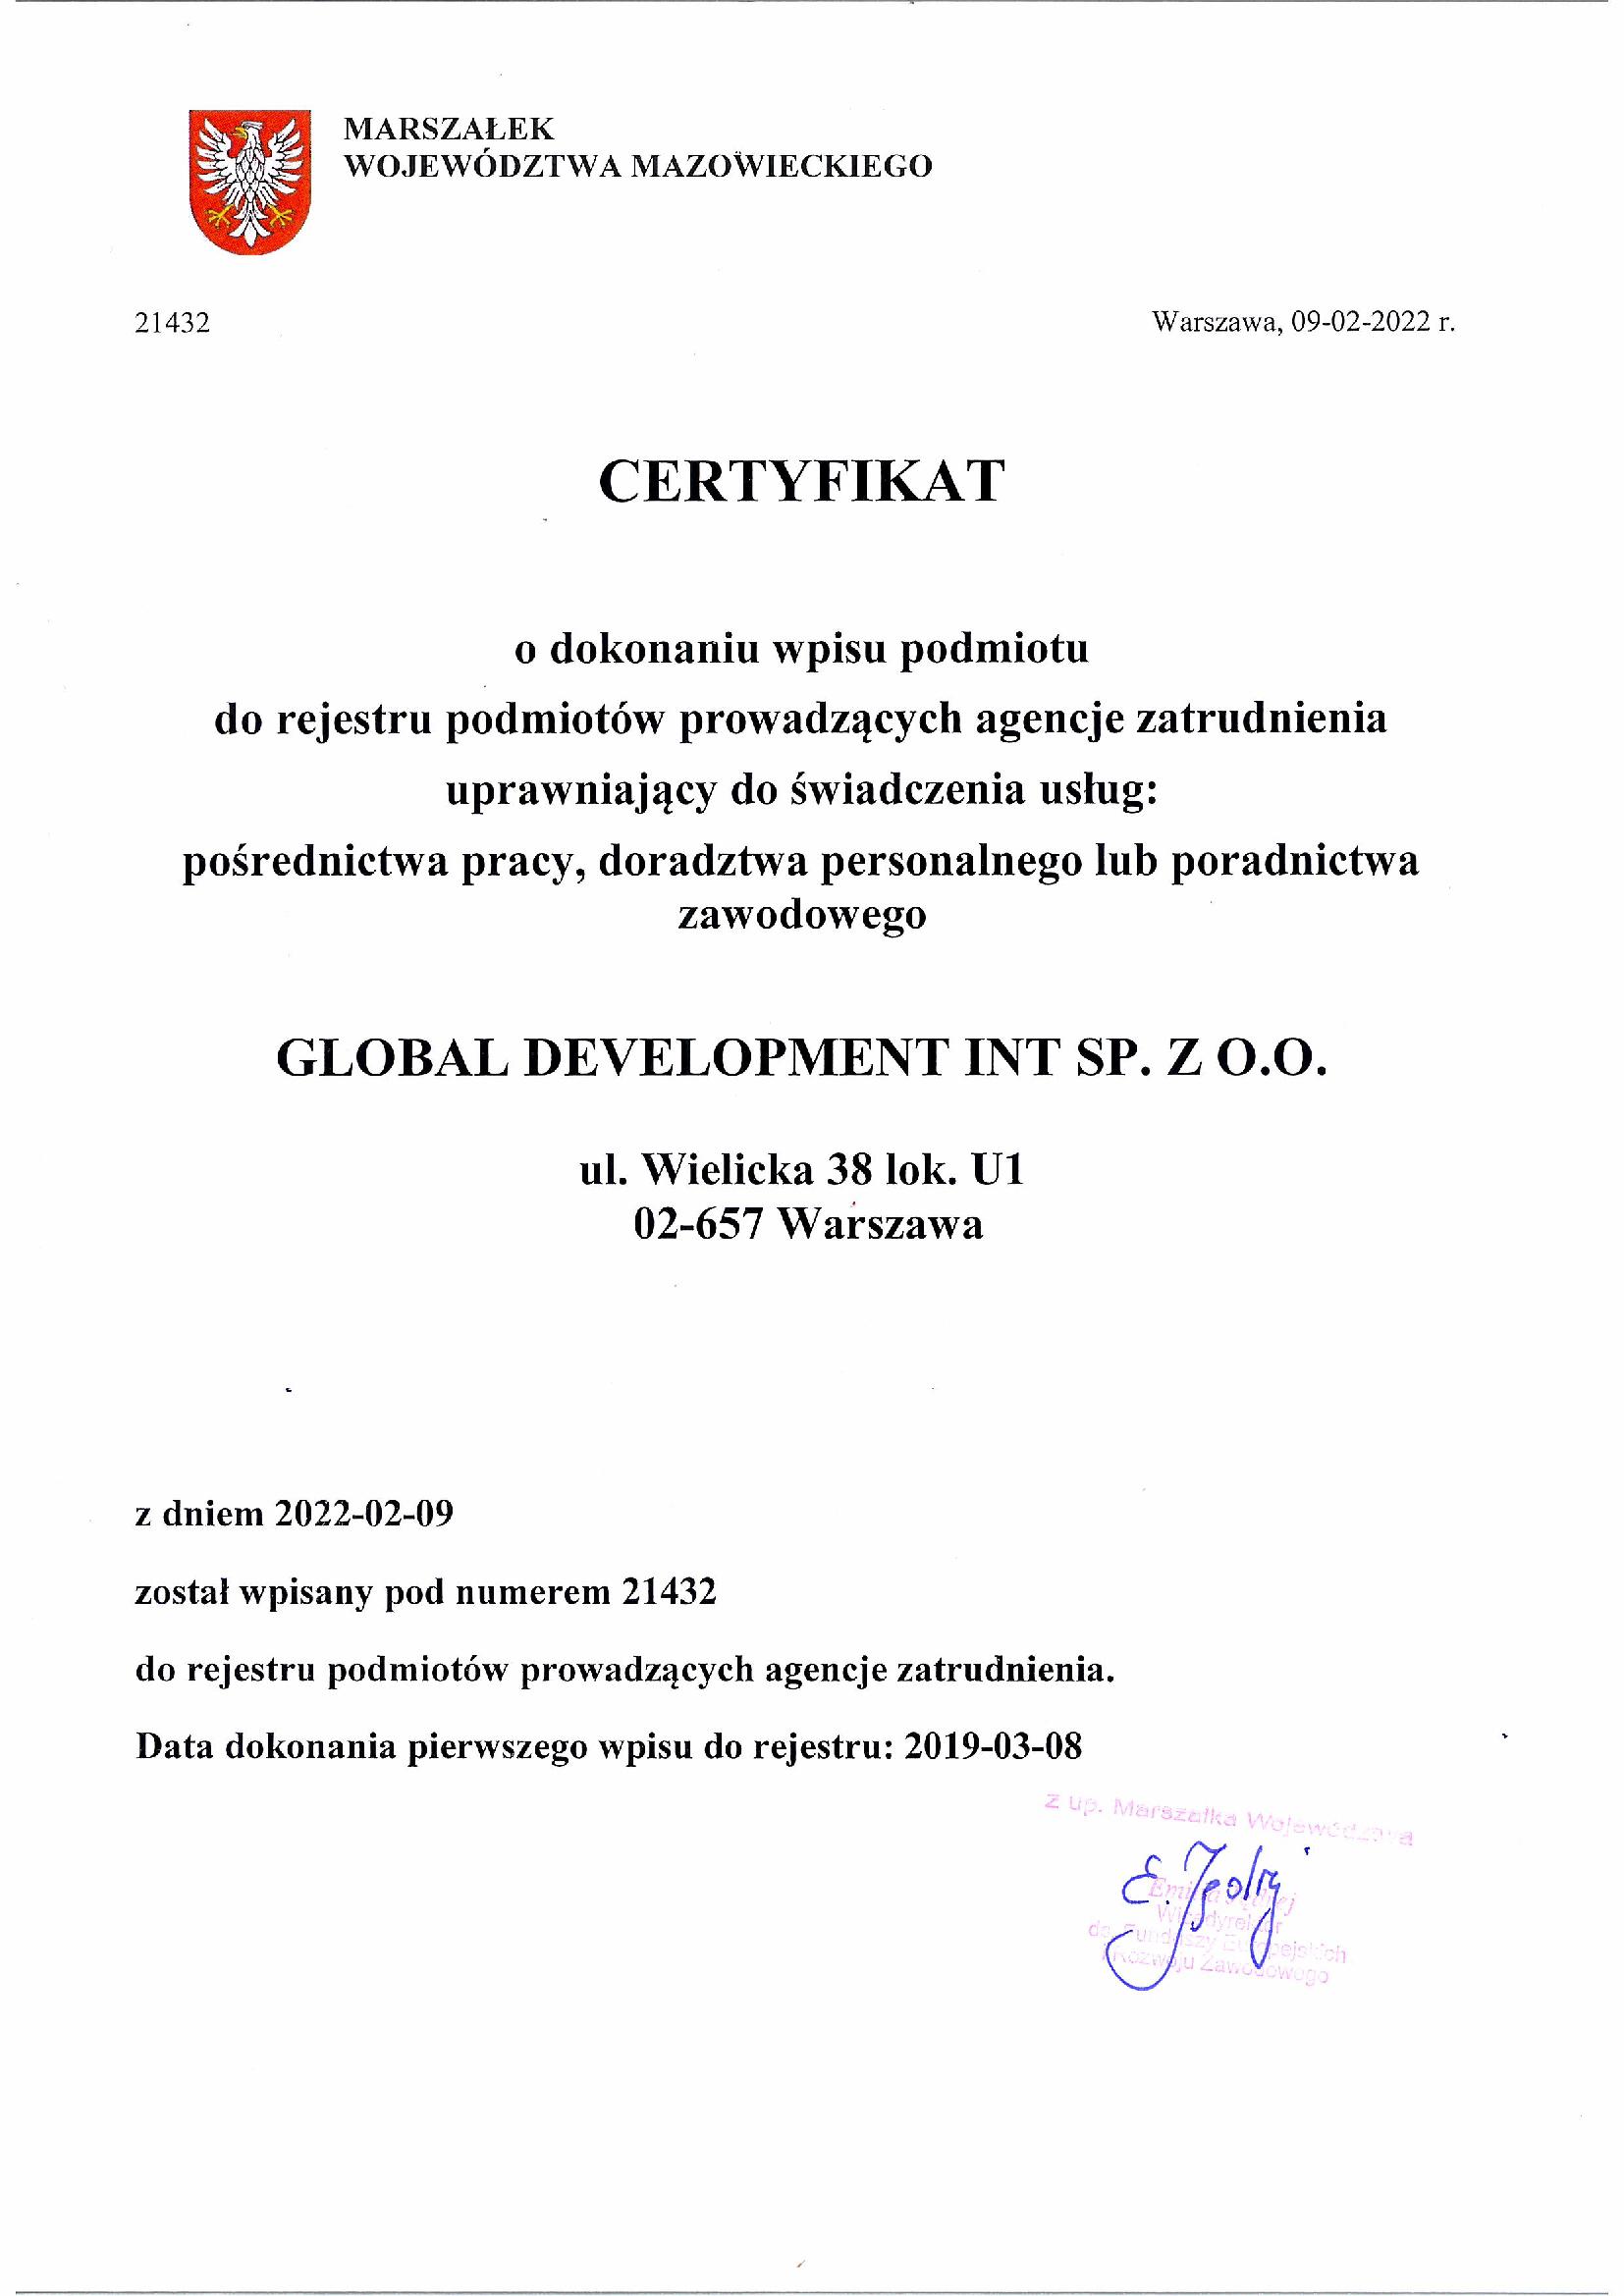 certyfikat_global_development2